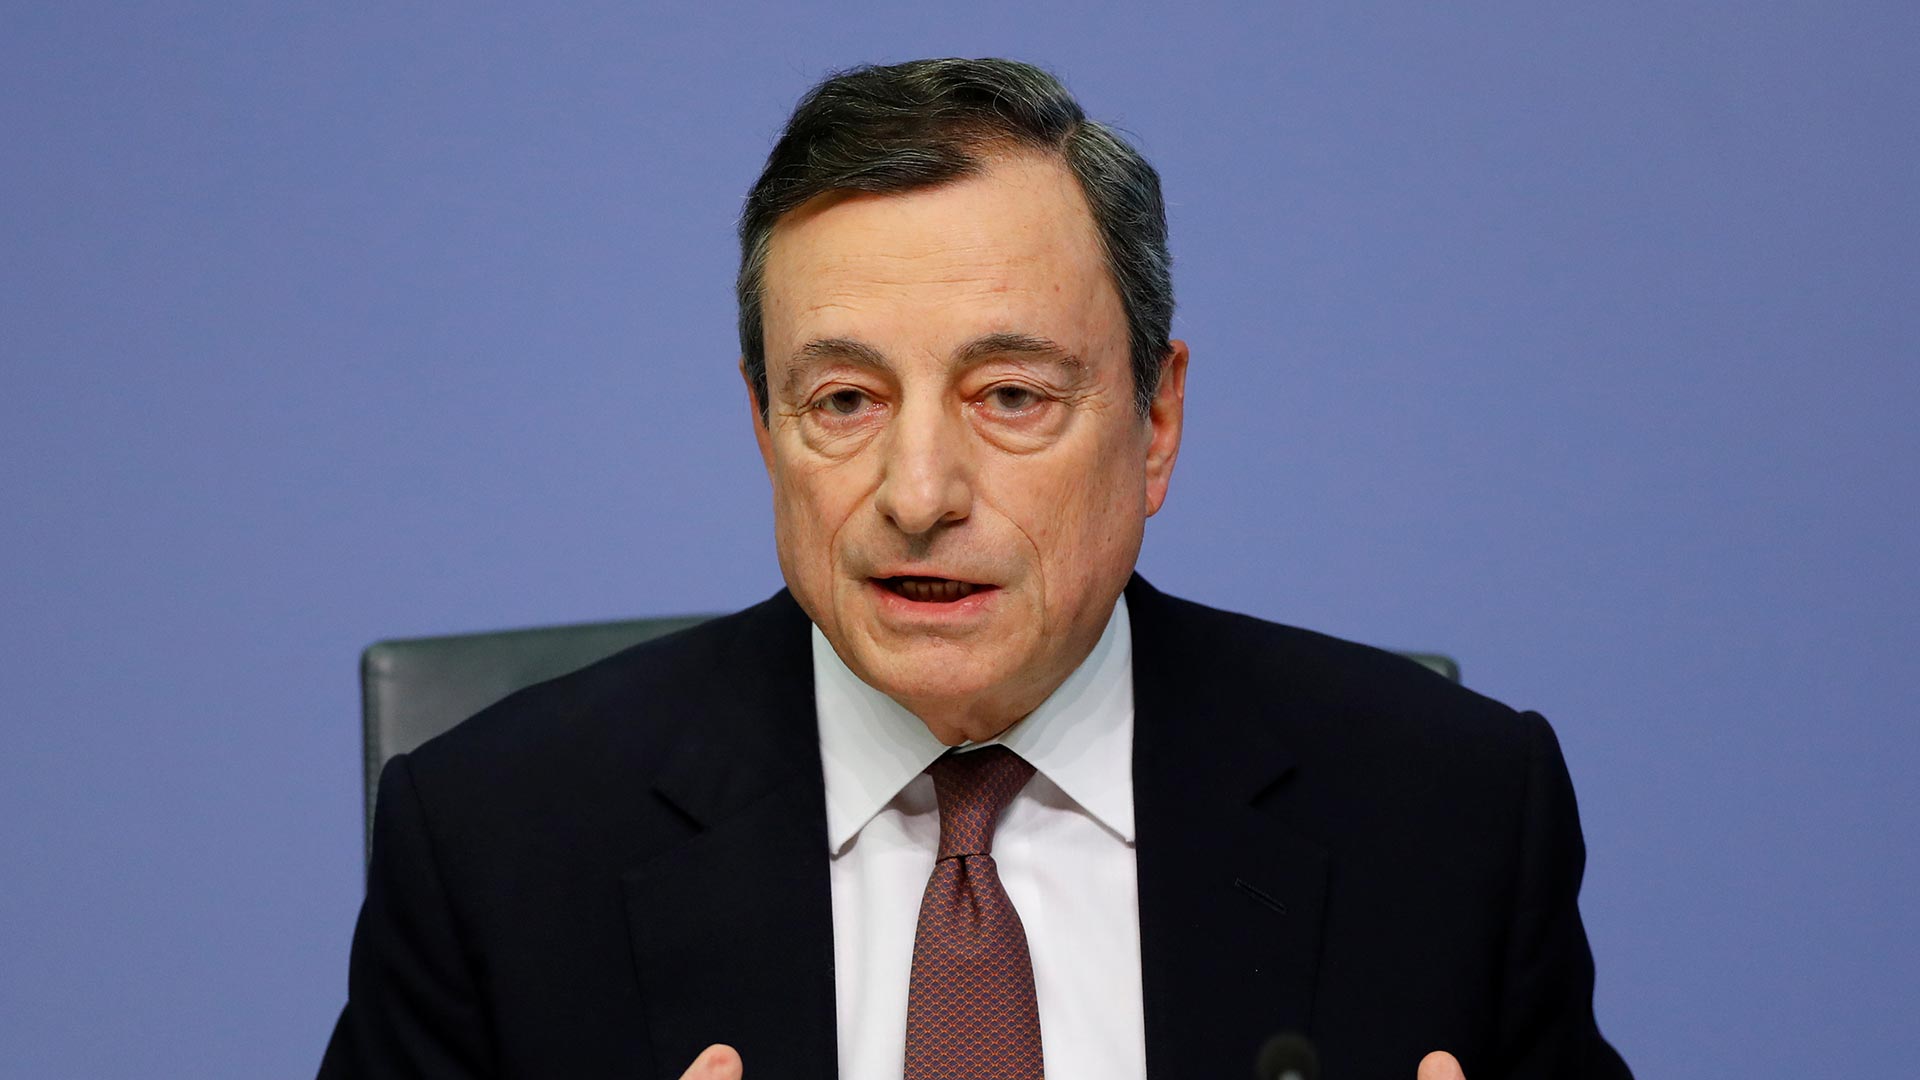 “Draghi, please don’t go”